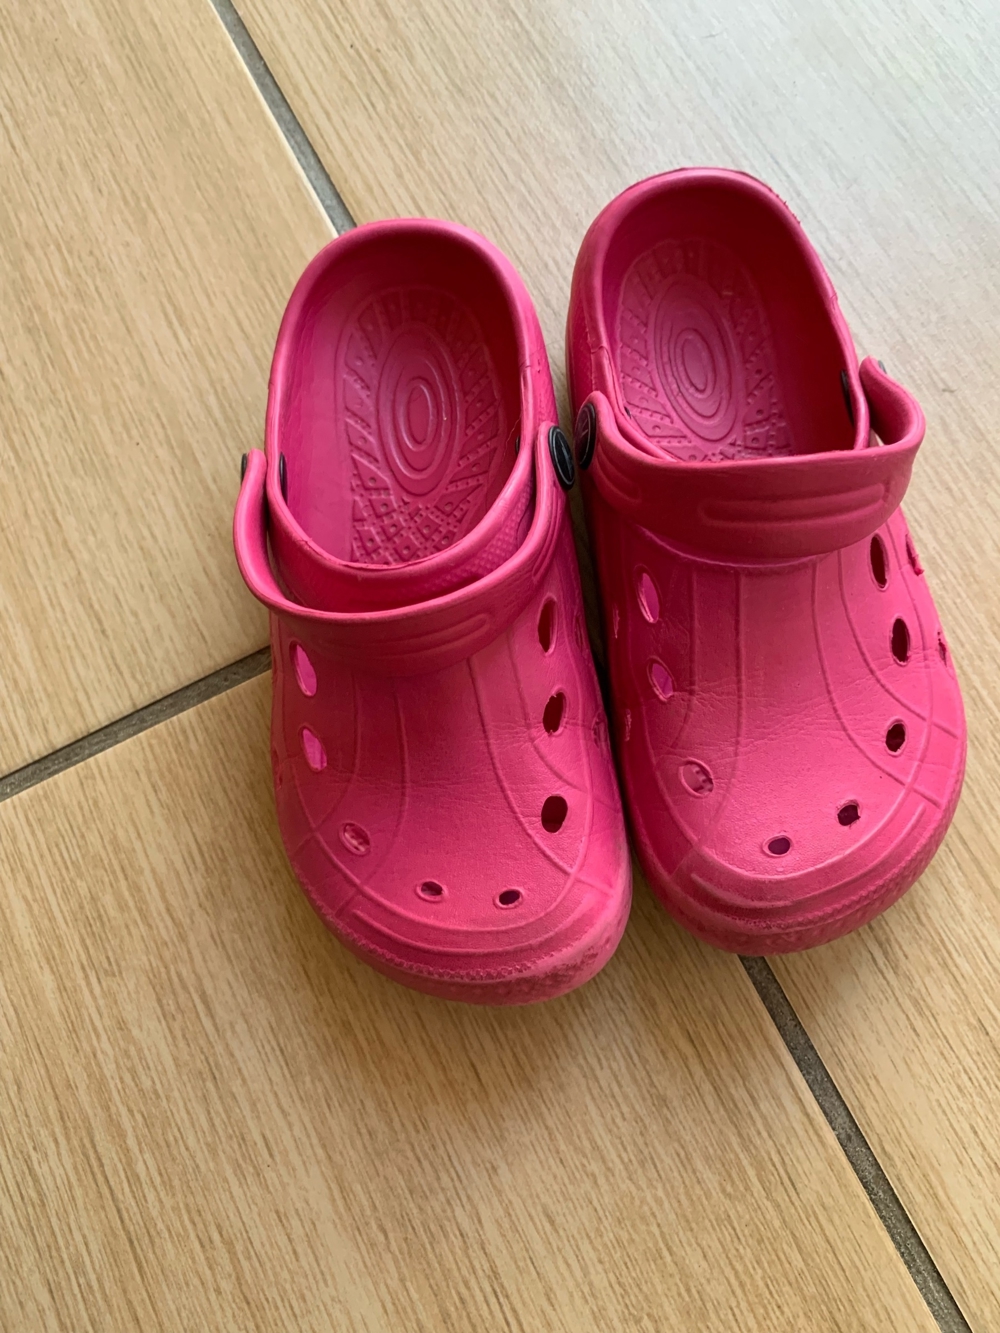 Schuhe Mädchen 29 Pink